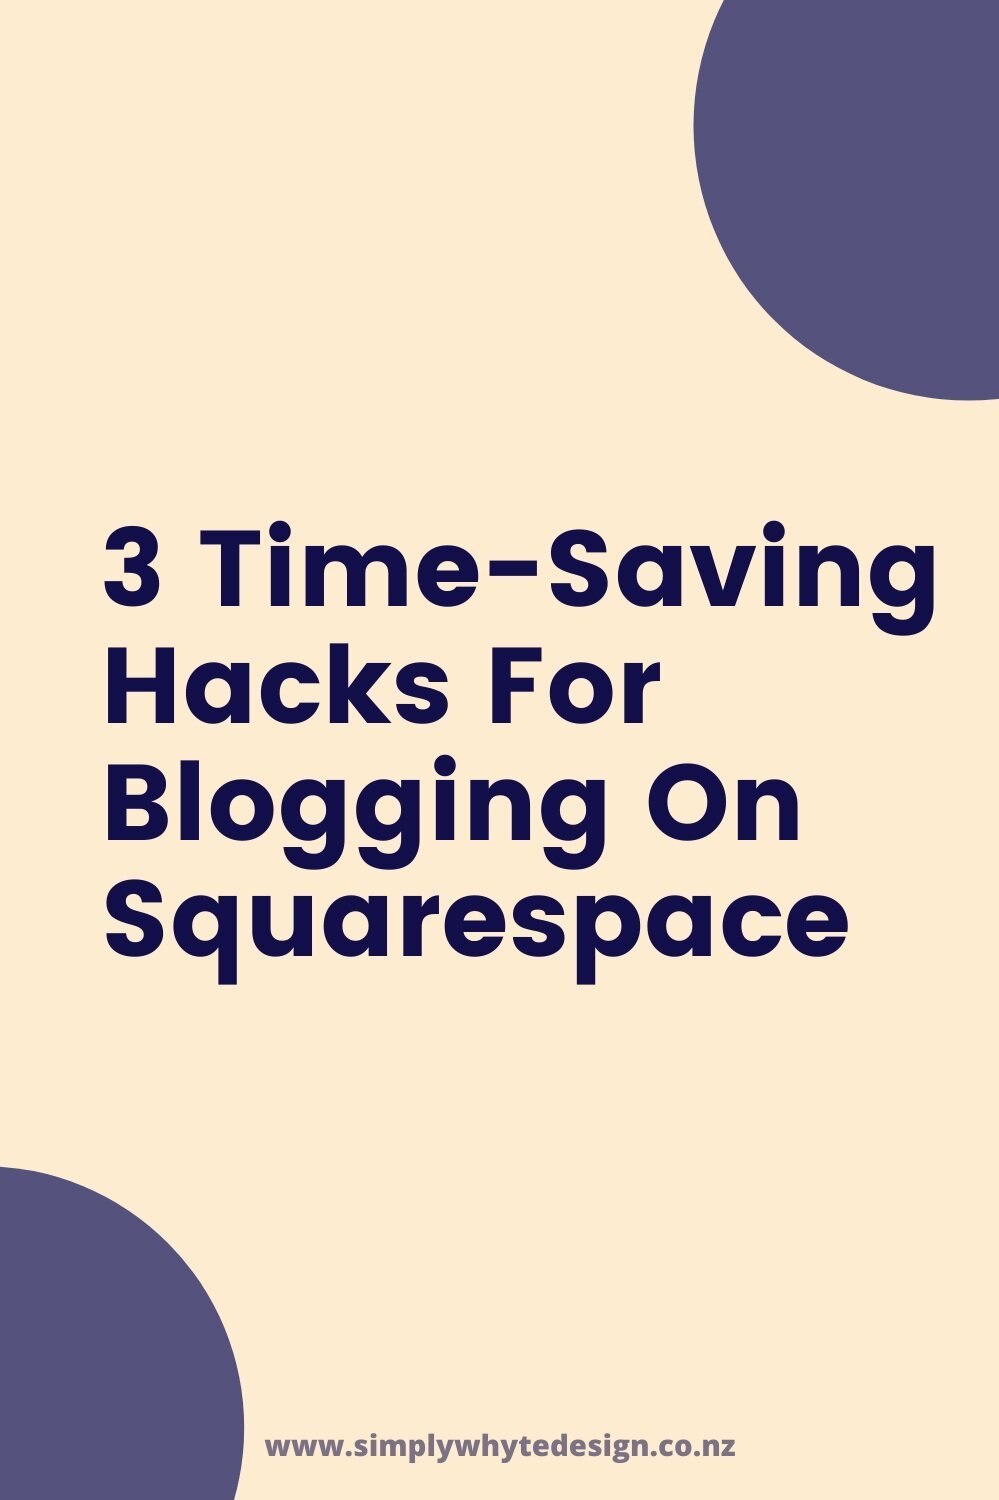 3+Time-Saving+Hacks+For+Blogging+On+Squarespace.jpg